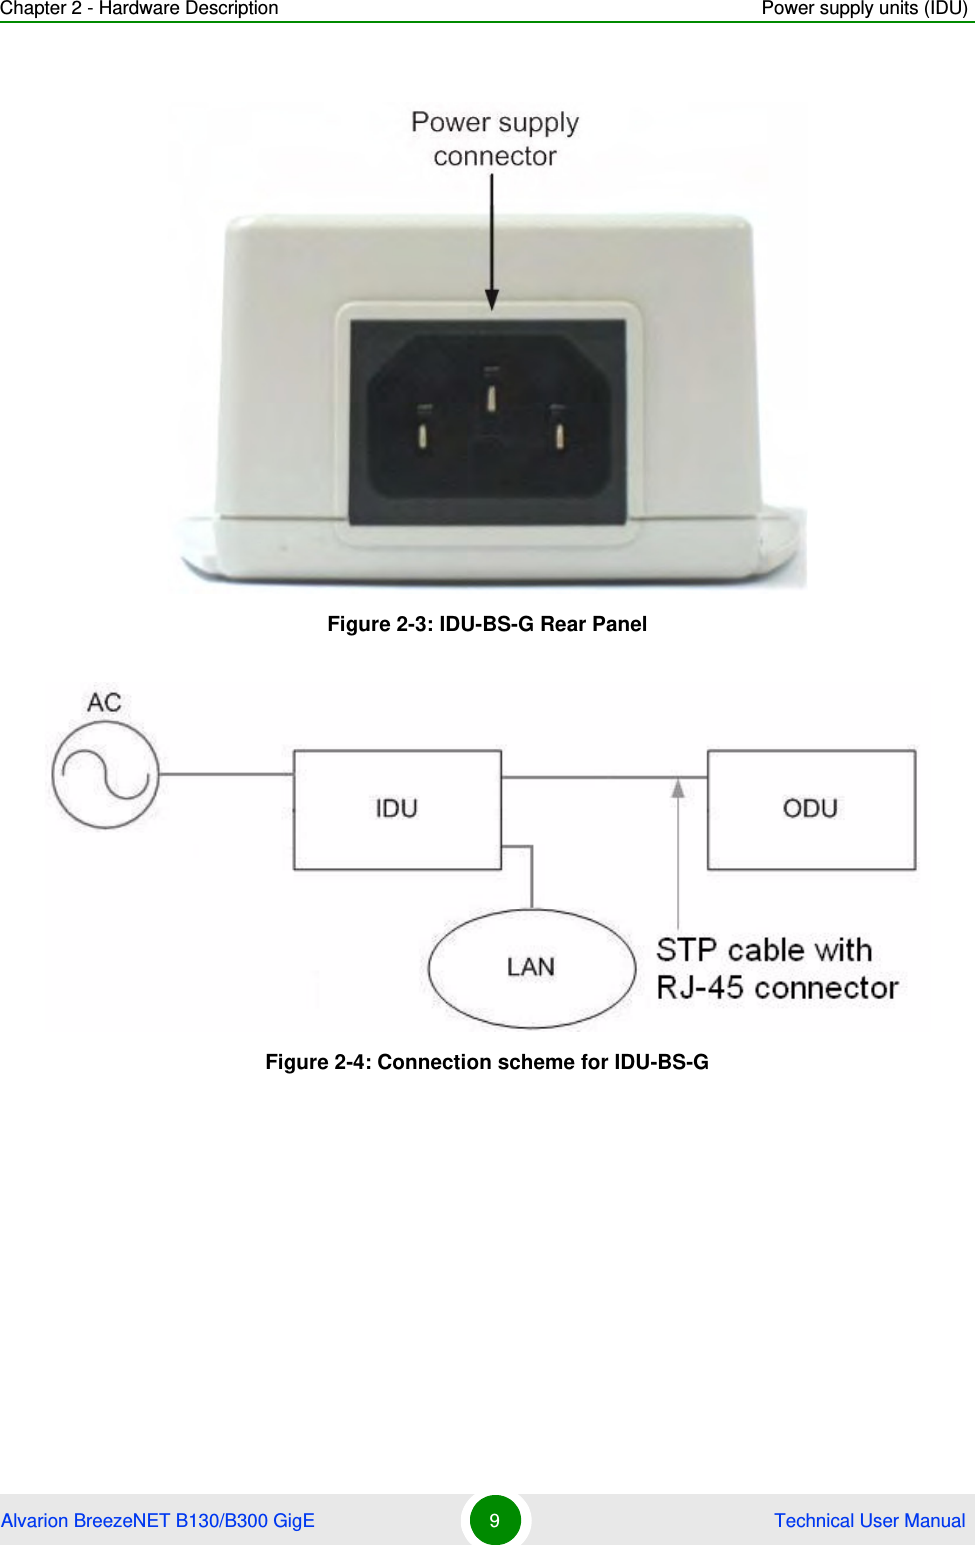 Chapter 2 - Hardware Description Power supply units (IDU)Alvarion BreezeNET B130/B300 GigE 9 Technical User ManualFigure 2-3: IDU-BS-G Rear PanelFigure 2-4: Connection scheme for IDU-BS-G